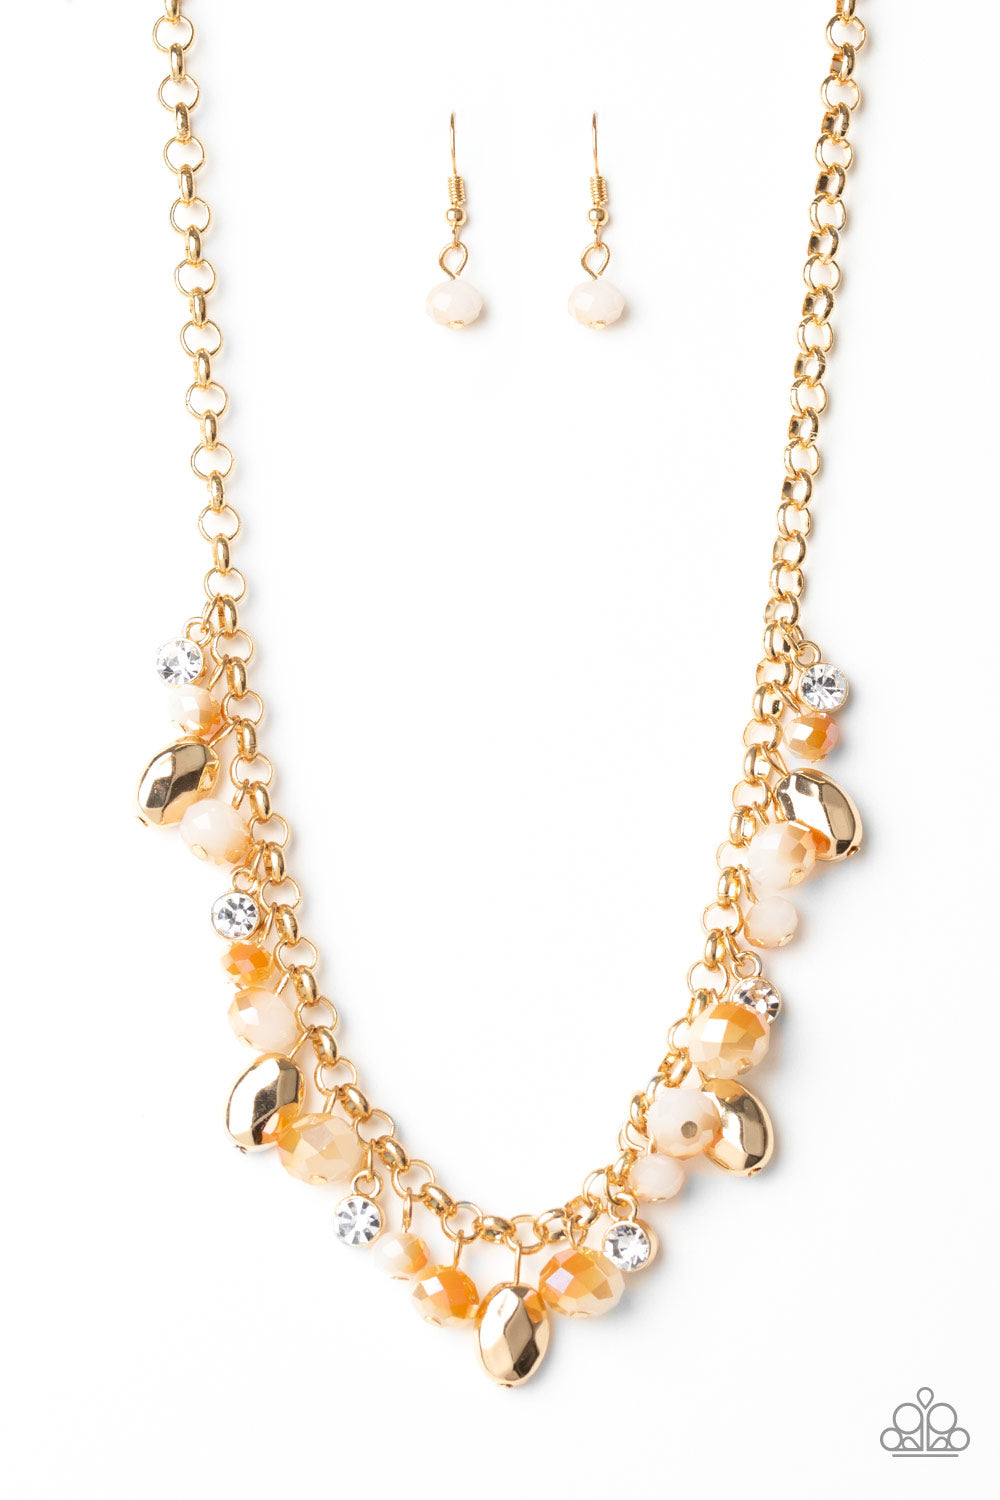 Downstage Dazzle - gold - Paparazzi necklace